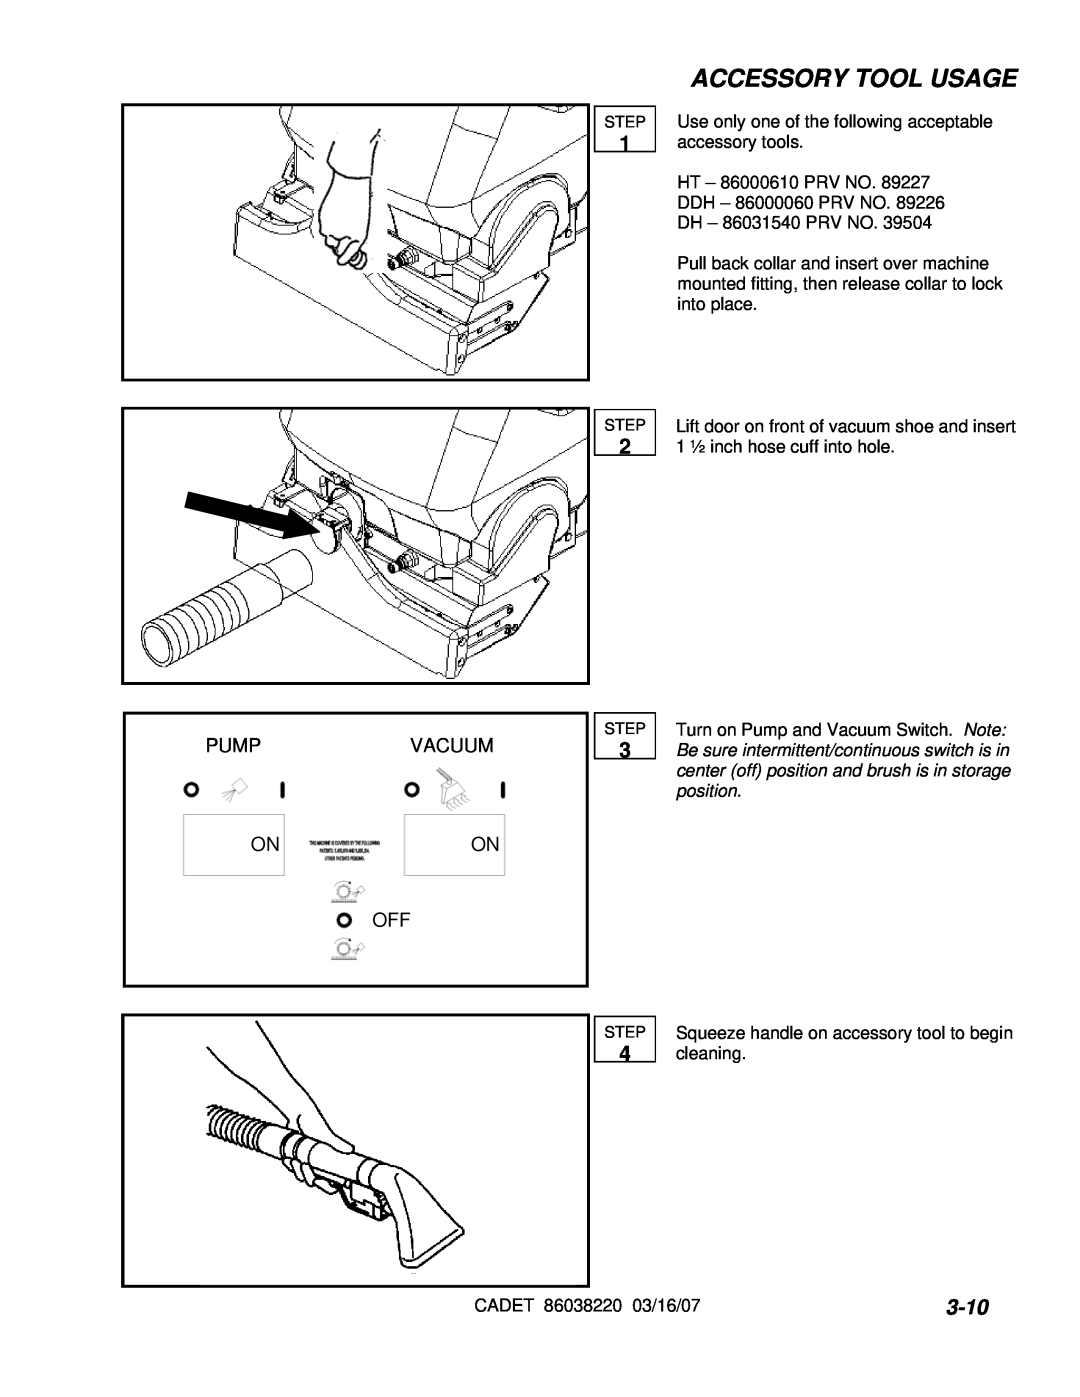 Windsor CDT7, 10080220 manual Accessory Tool Usage, 3-10, Pumpvacuum Onon Off 